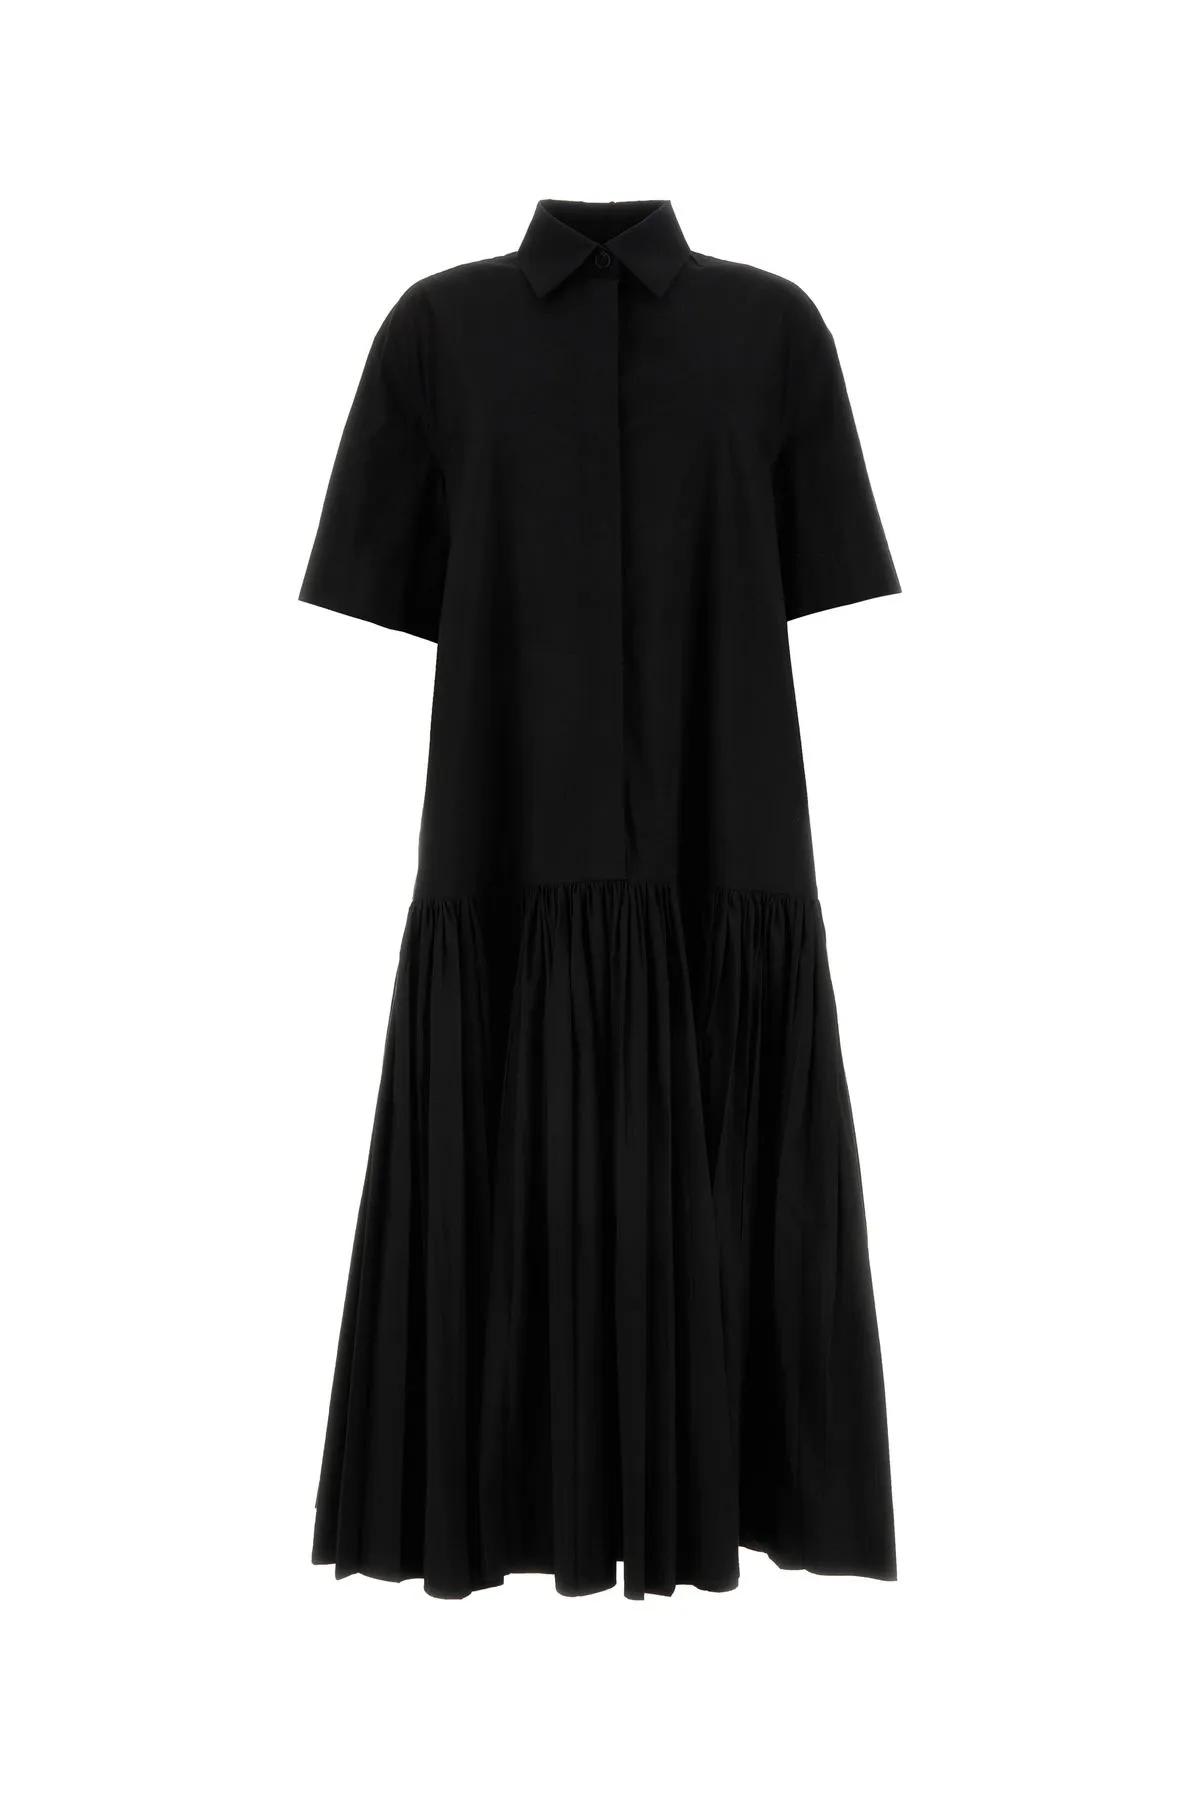 JIL SANDER BLACK POPLIN SHIRT DRESS